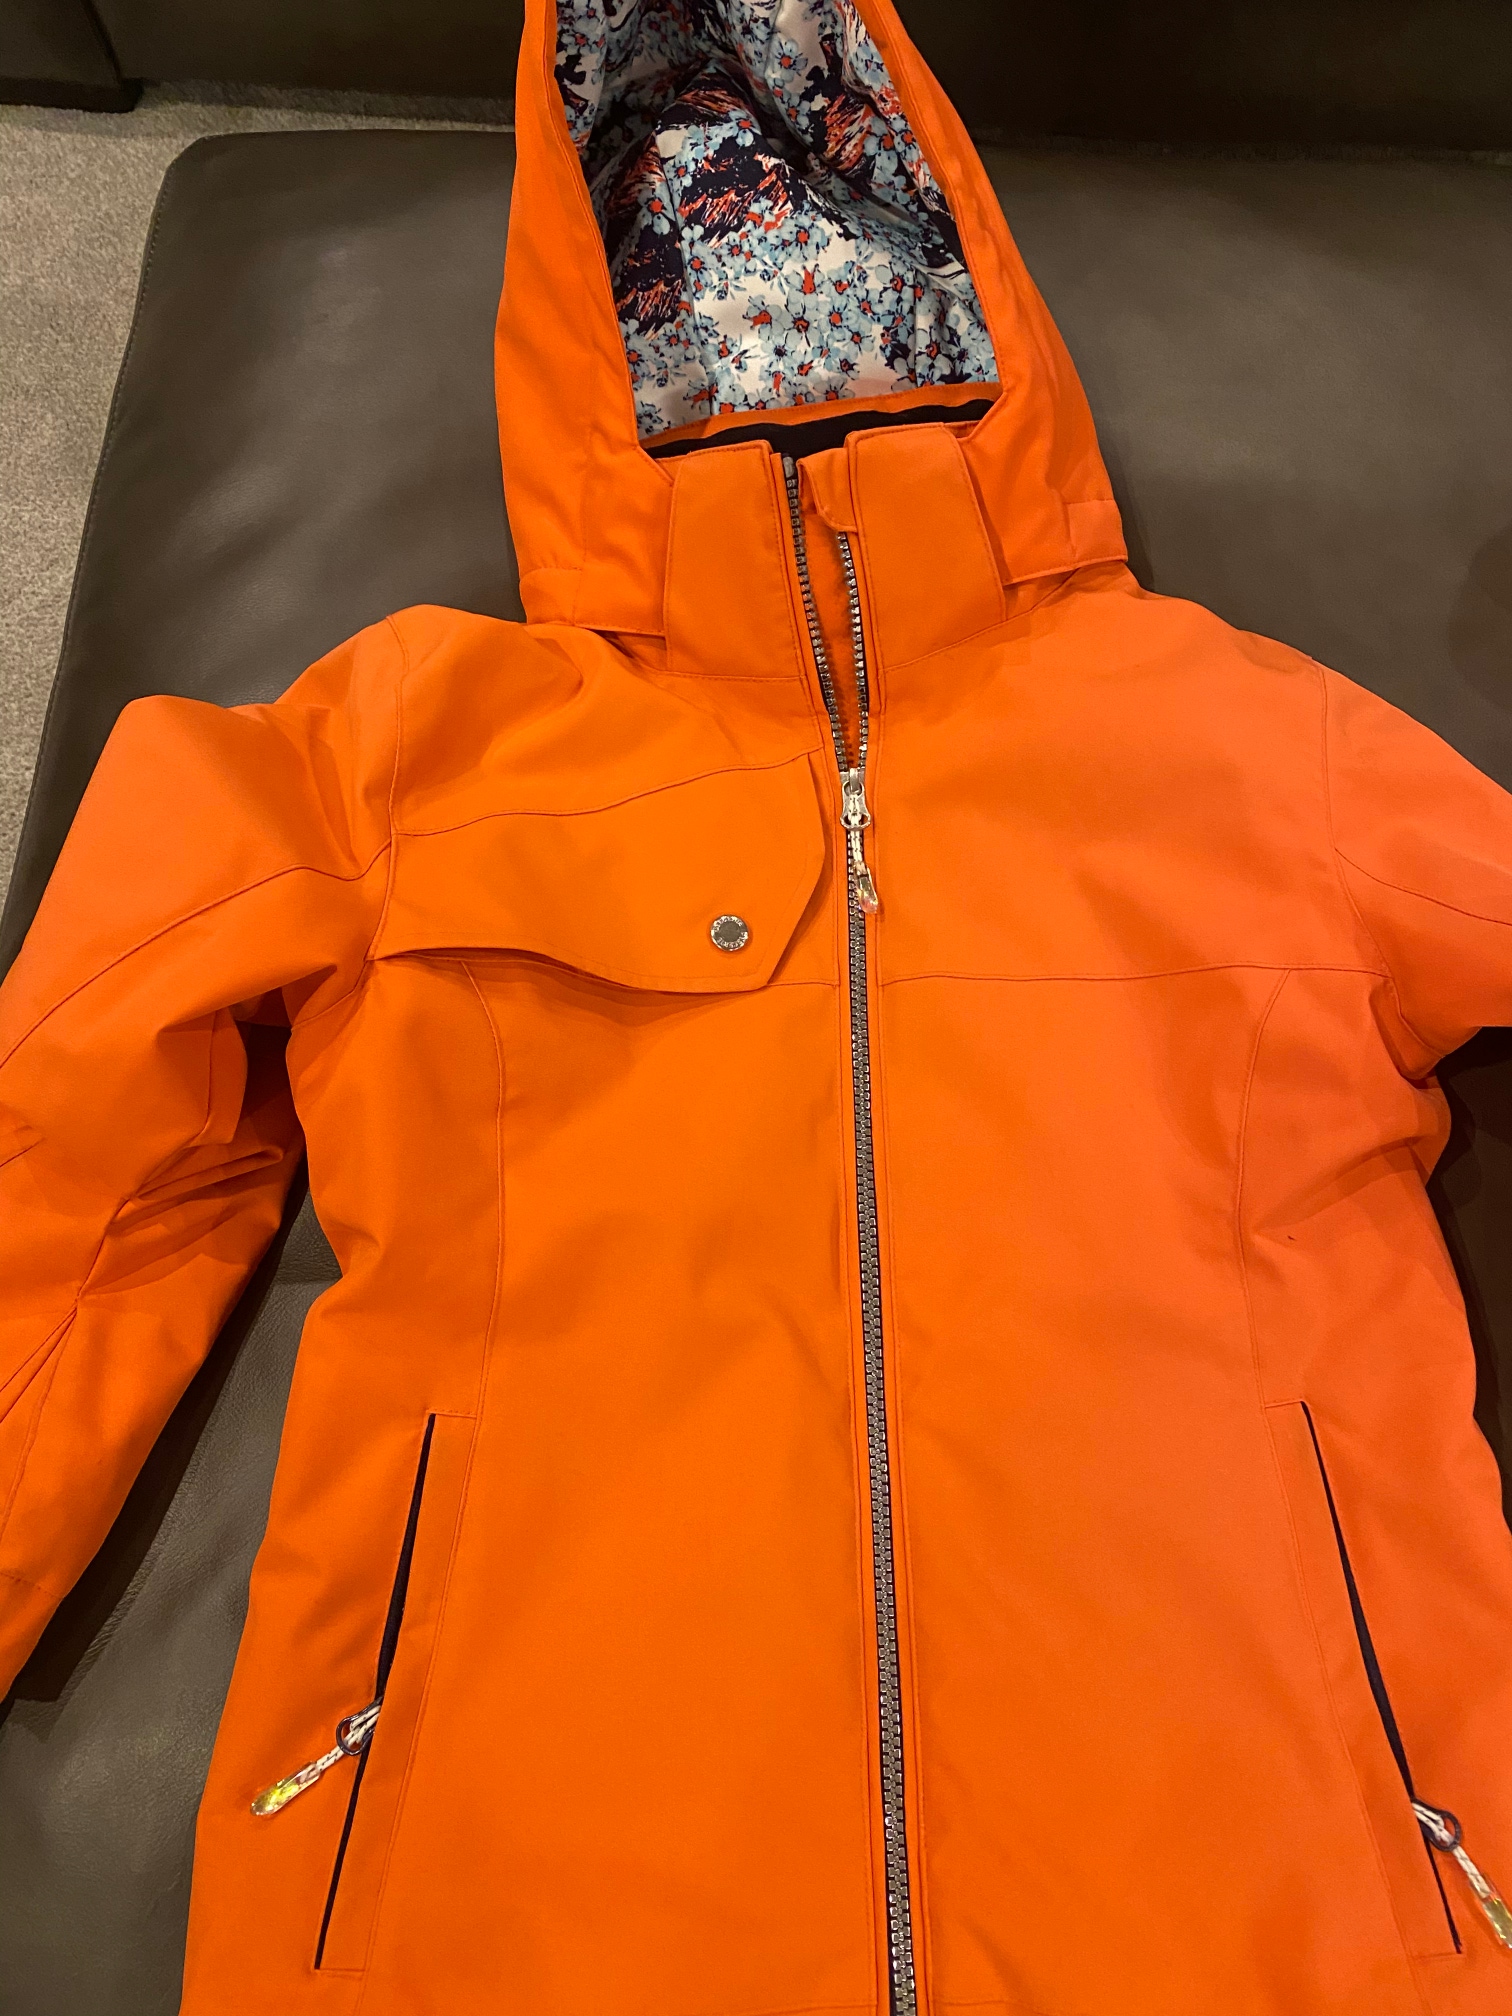 Girl’s Coral Descente Ski Jacket